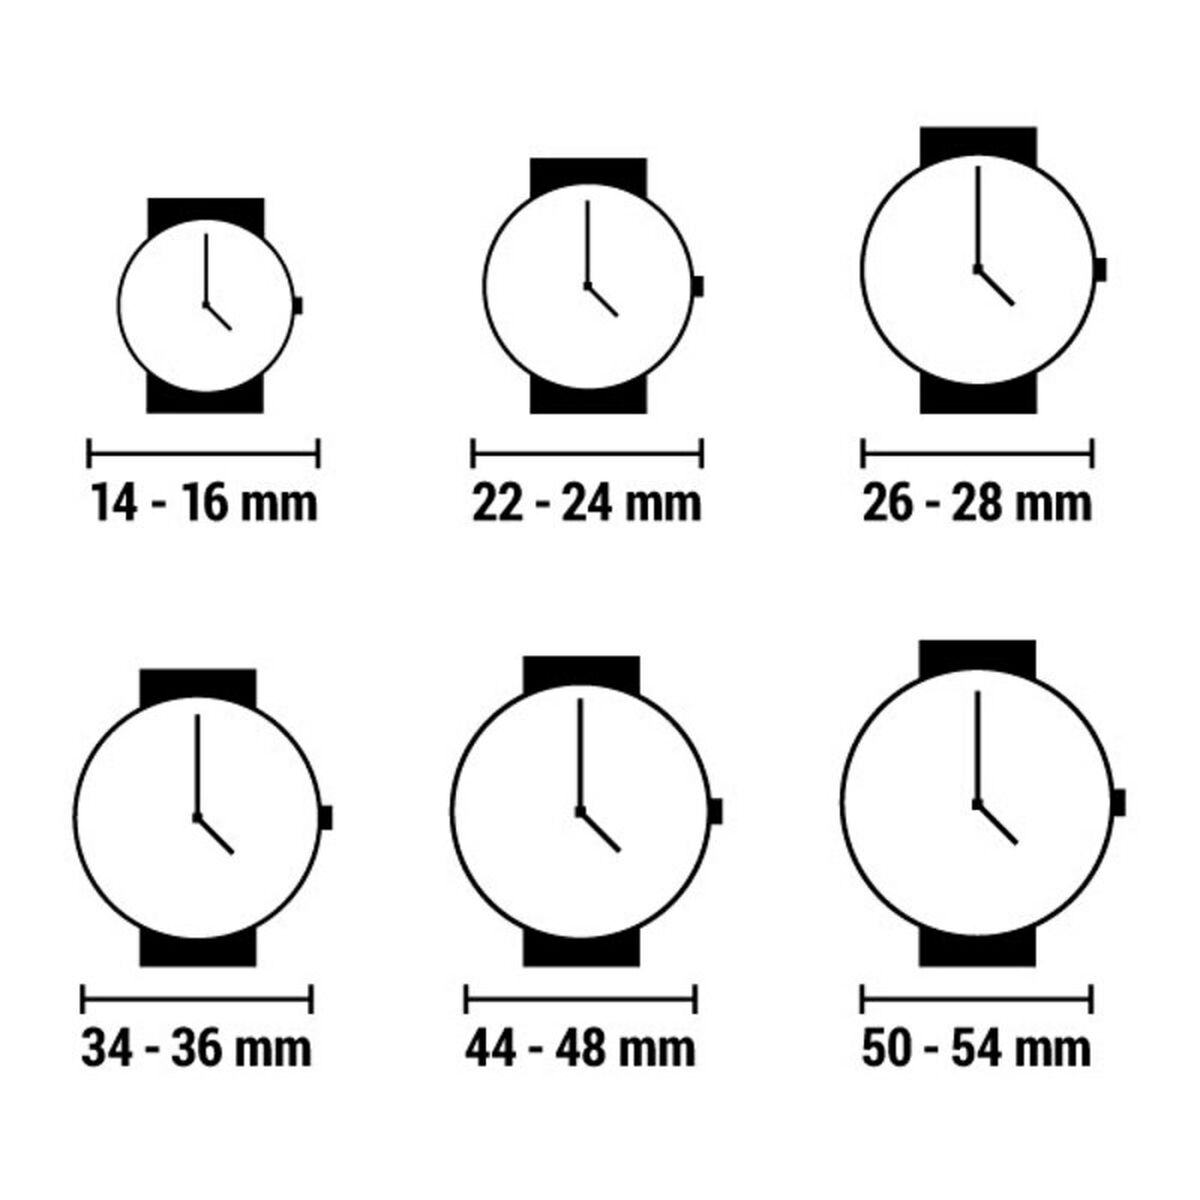 Horloge Dames Komono kom-w2856 (Ø 36 mm)